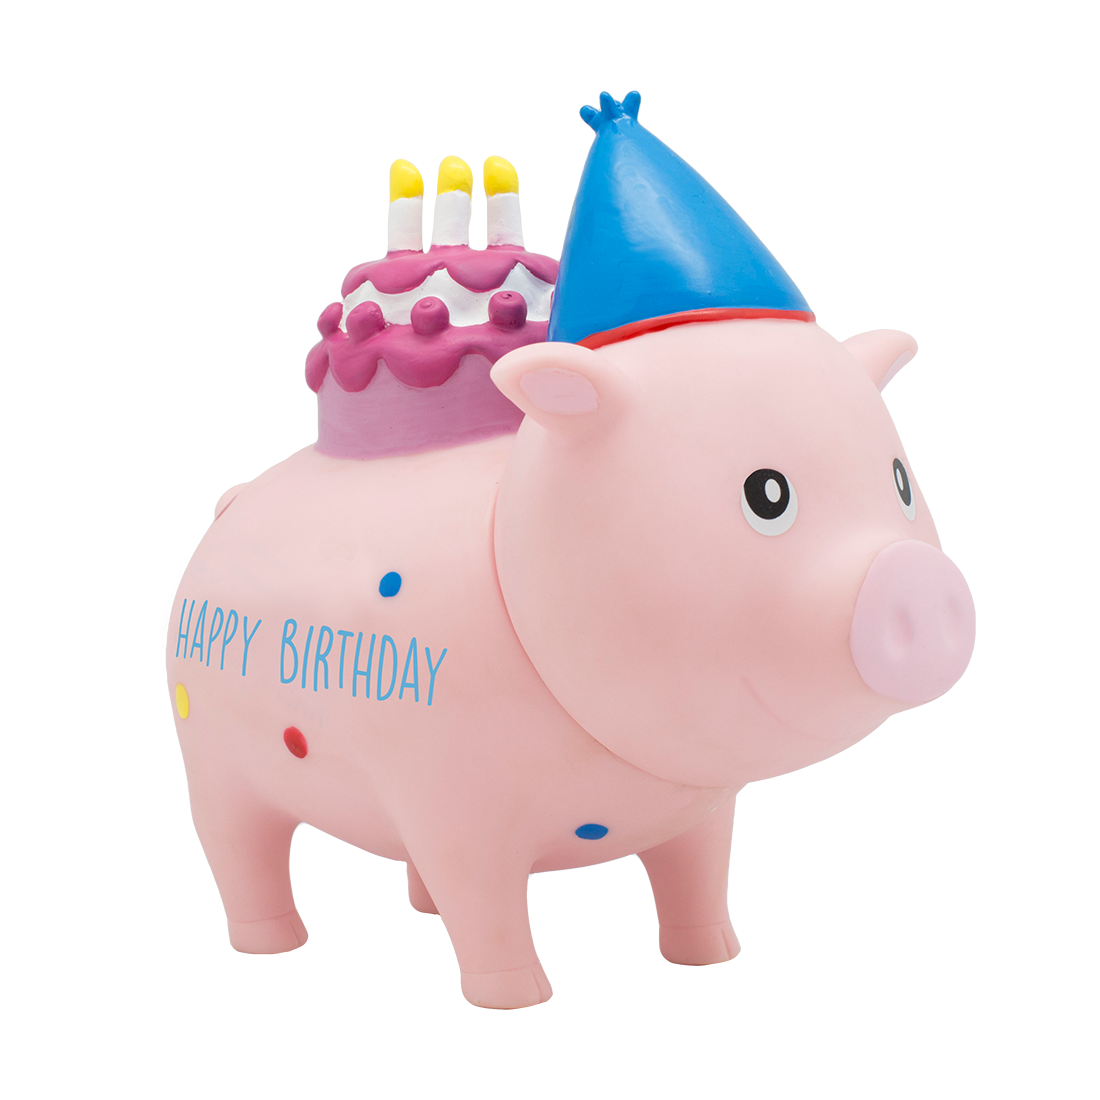 Birthday Pig